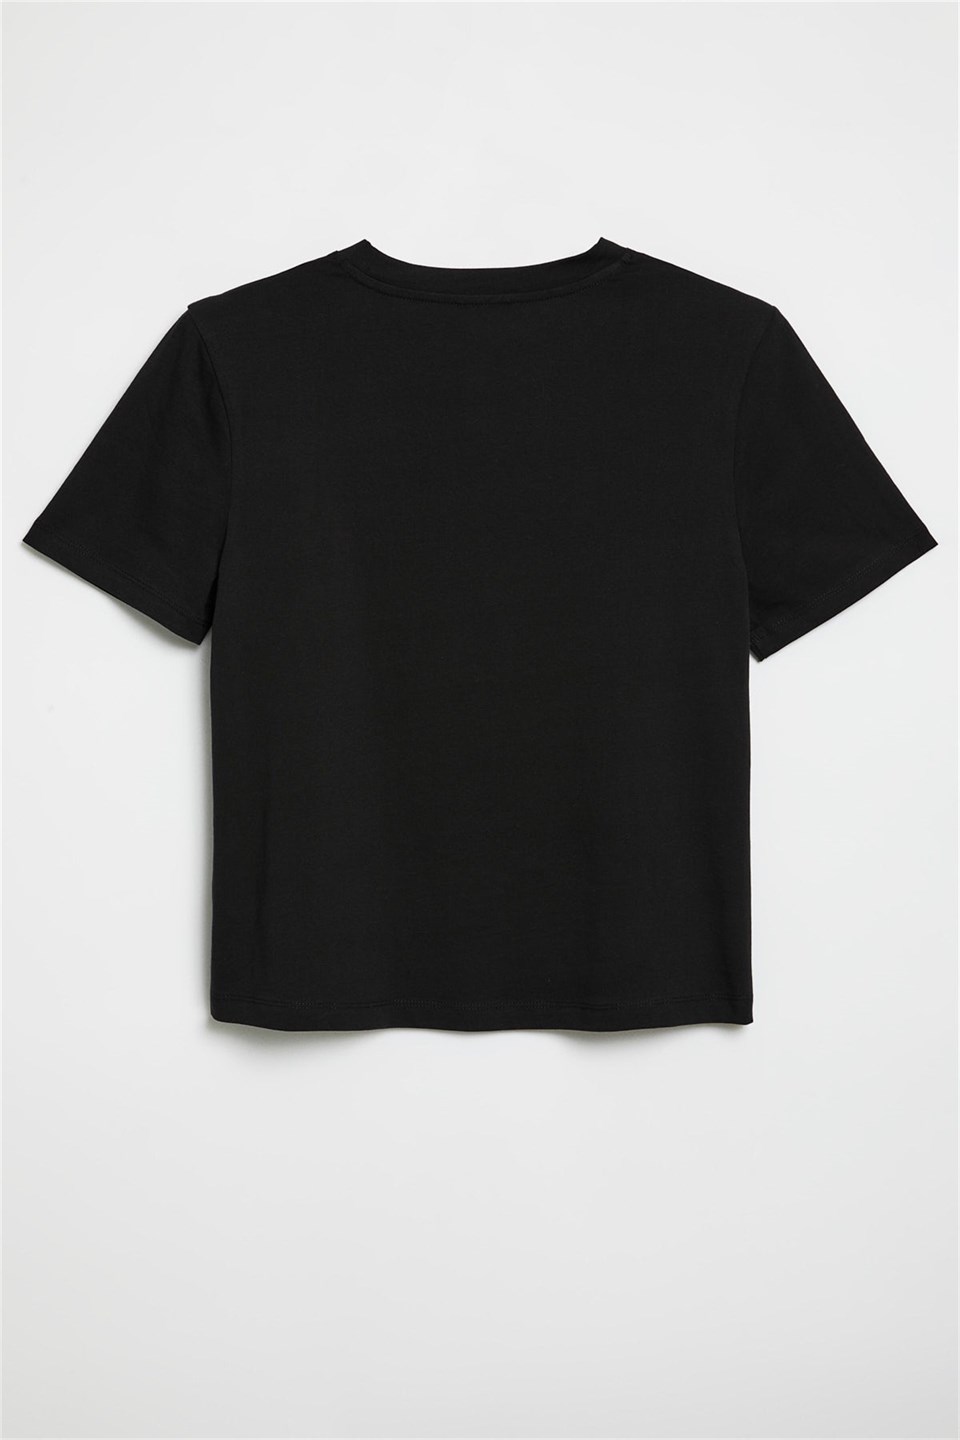 HANNAH Kadın Siyah Düz Renk Yuvarlak Yaka Comfort Fit T-Shirt